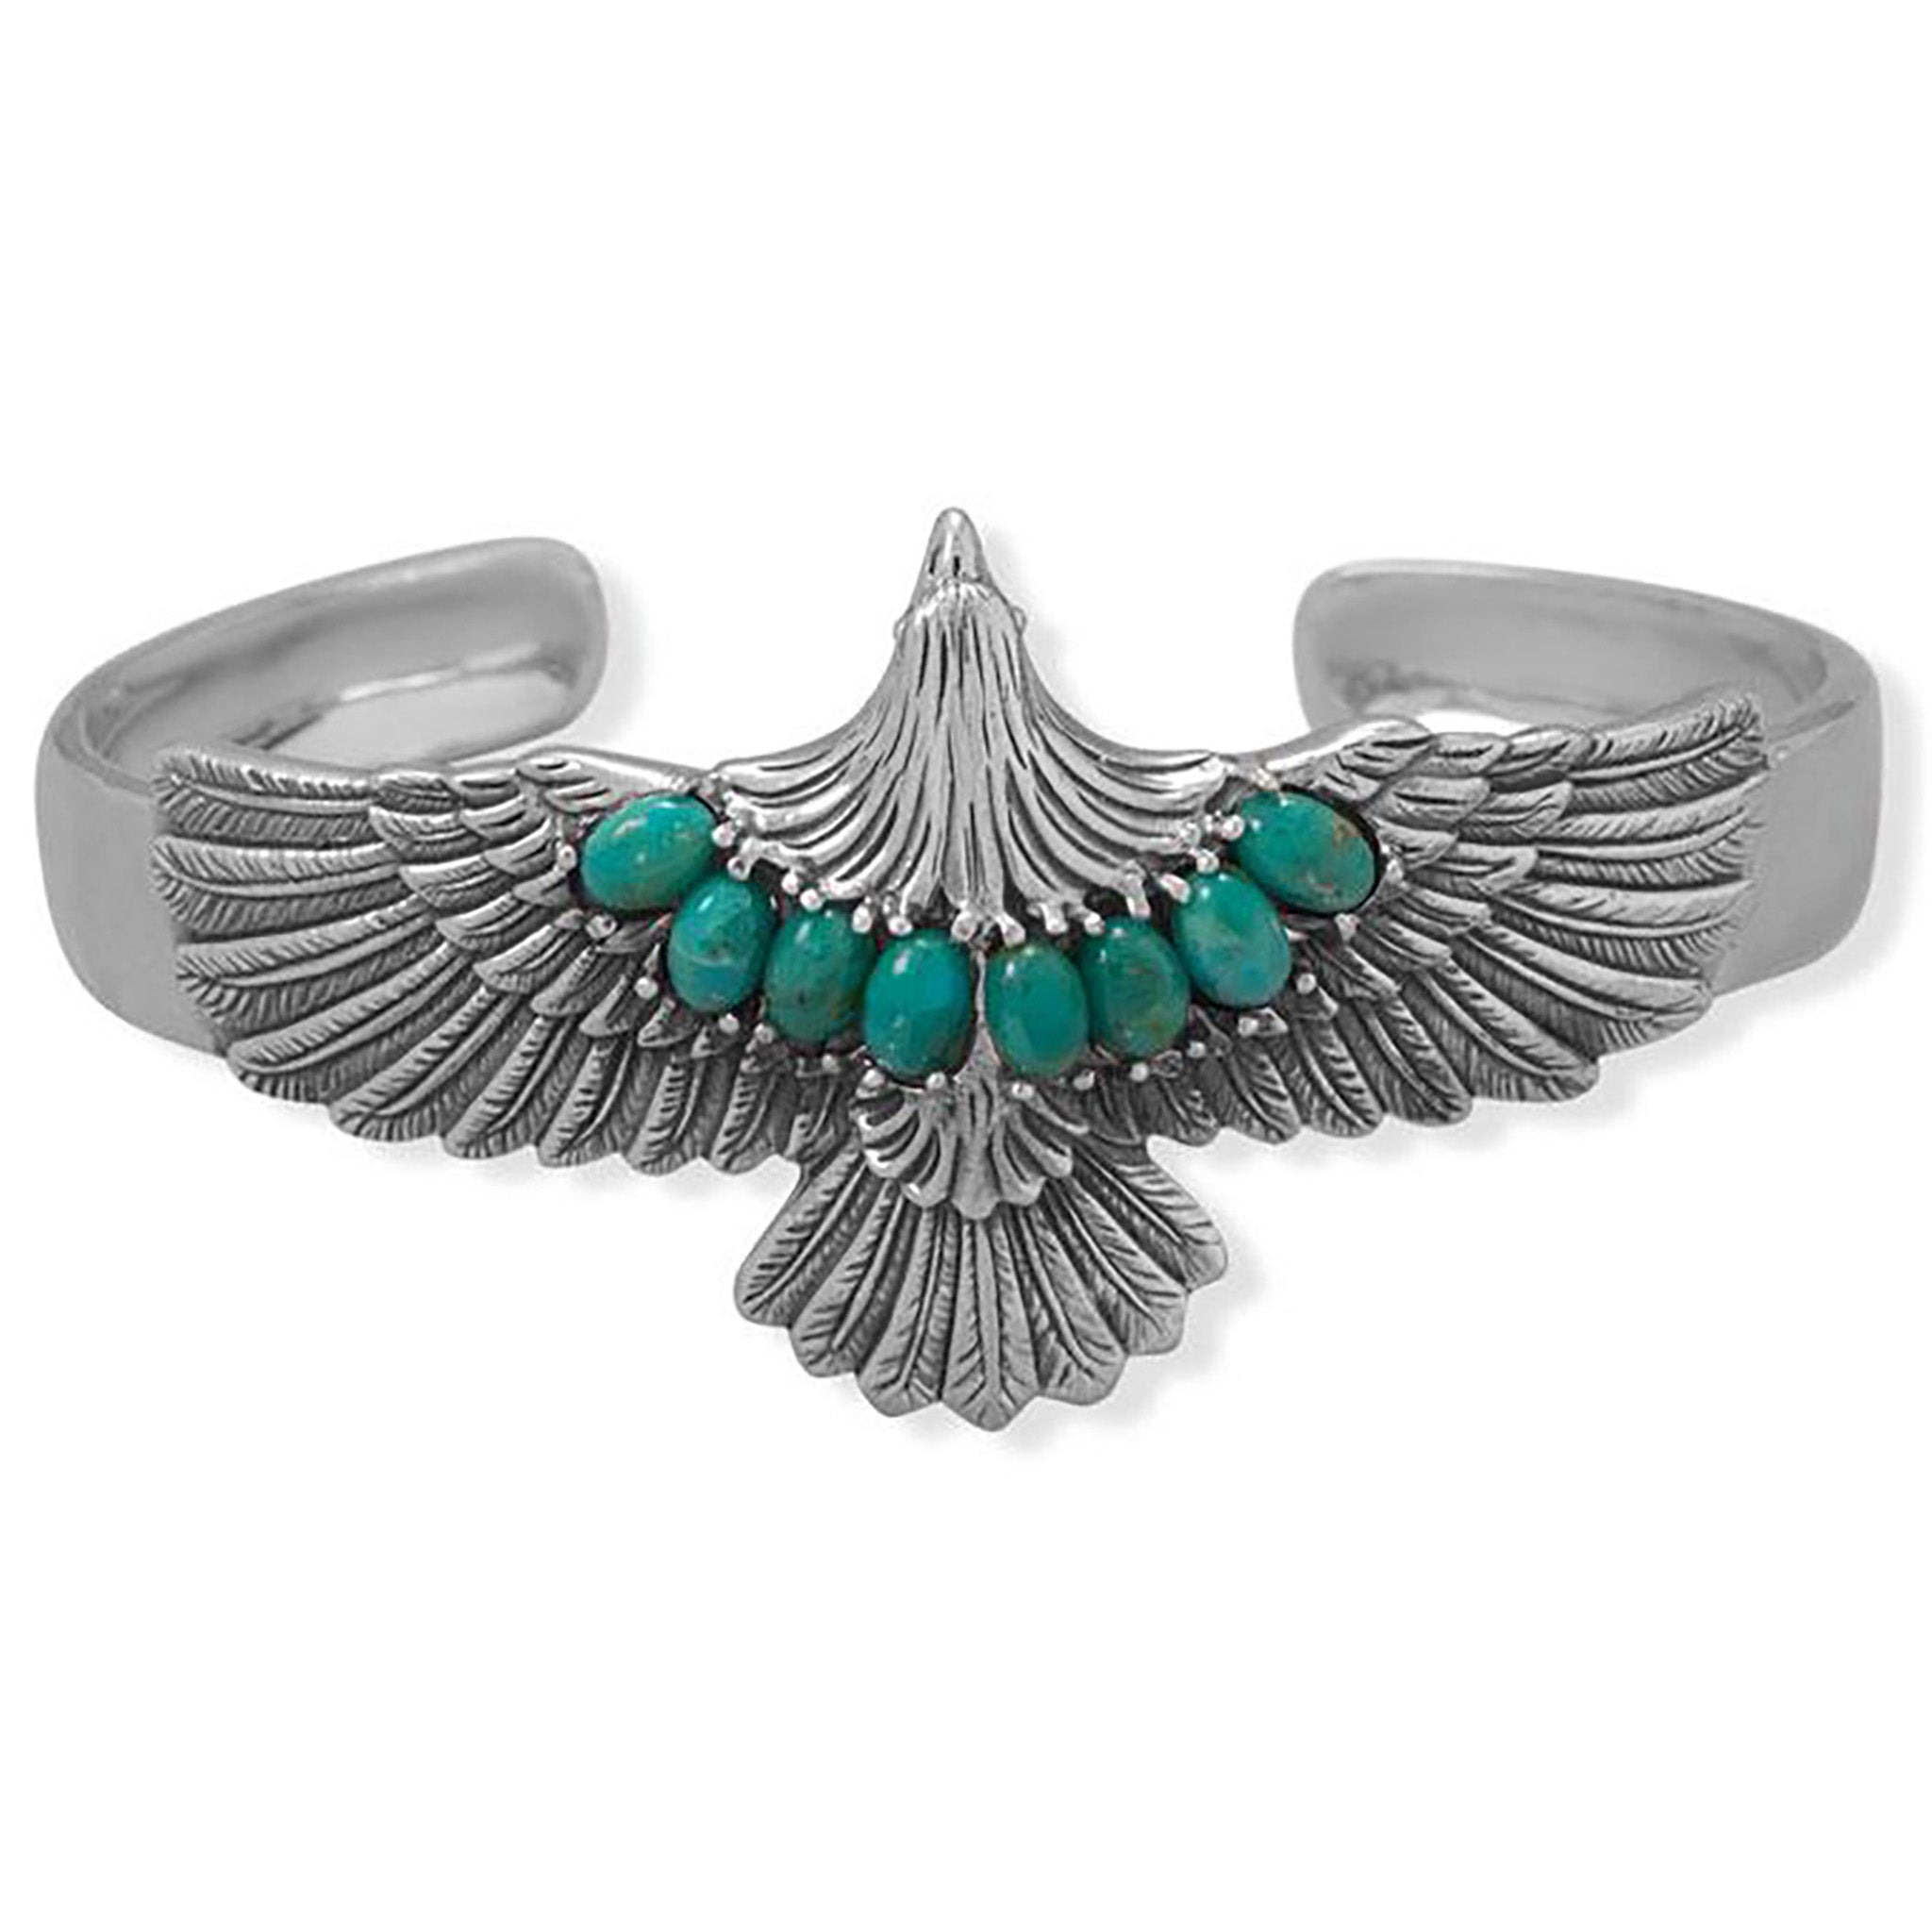 Turquoise Eagle Cuff Bracelet